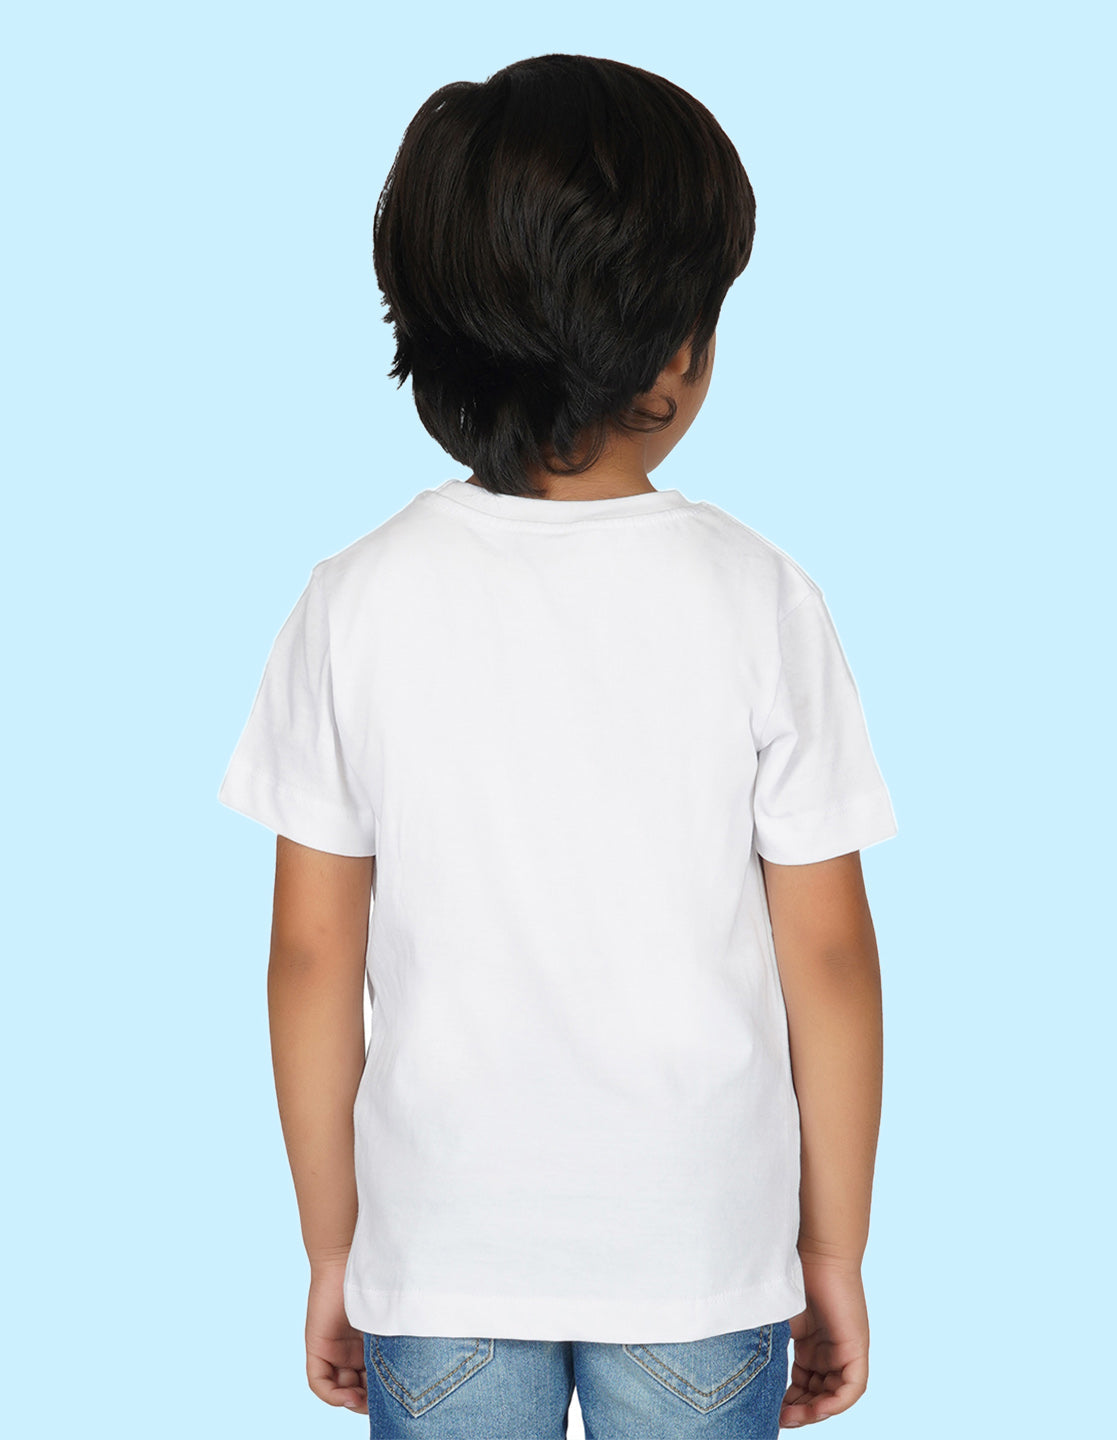 Nusyl Boys White Space Printed t-shirt